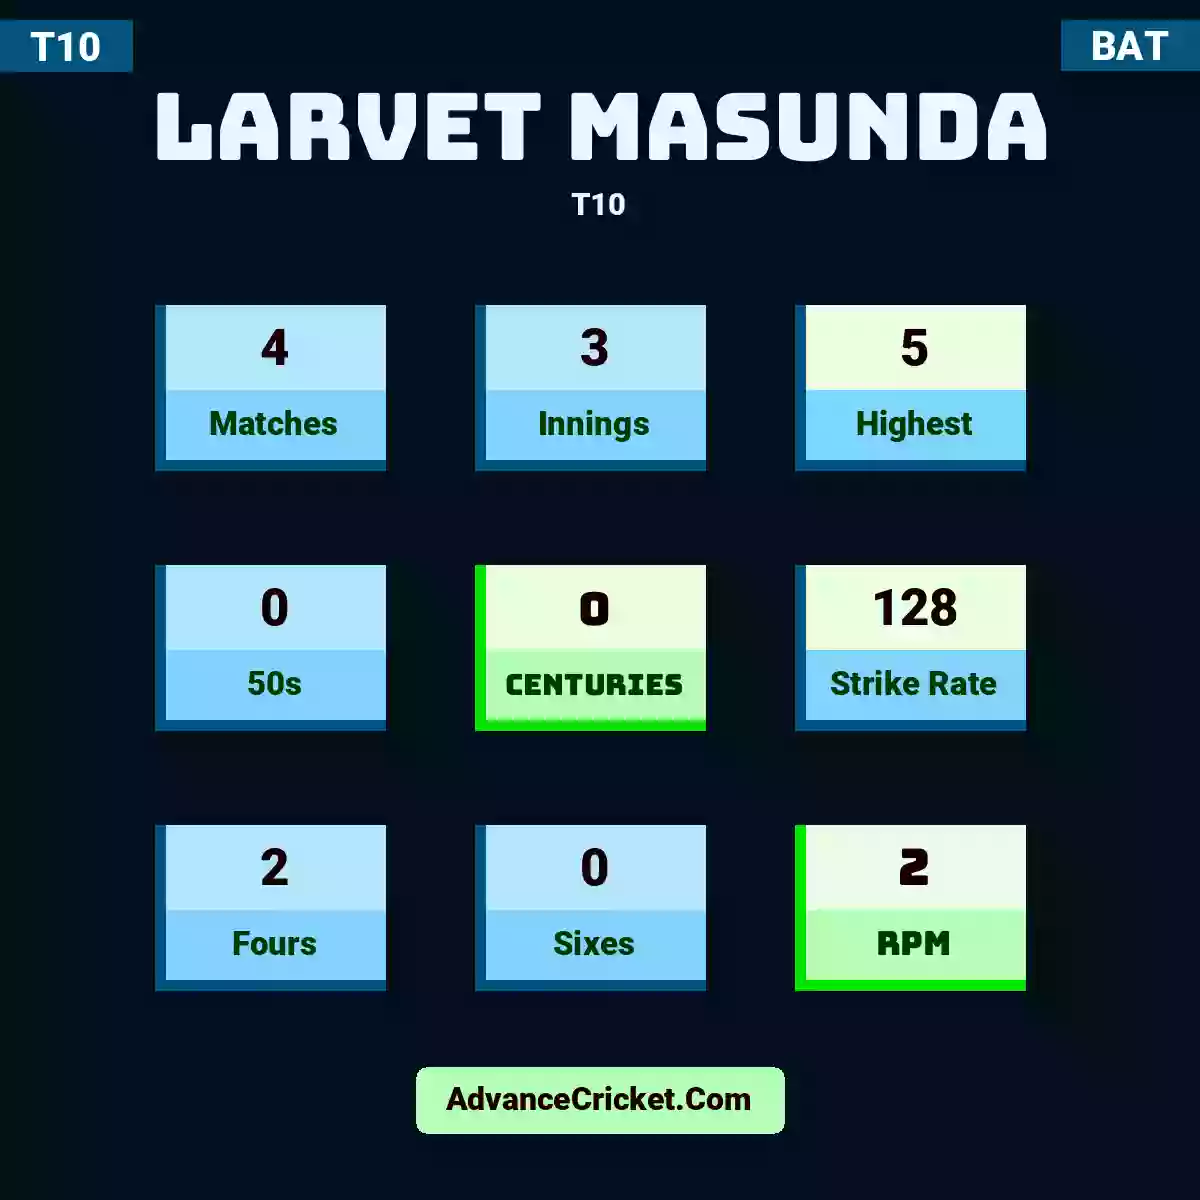 Larvet Masunda T10 , Larvet Masunda played 4 matches, scored 5 runs as highest, 0 half-centuries, and 0 centuries, with a strike rate of 128. L.Masunda hit 2 fours and 0 sixes, with an RPM of 2.